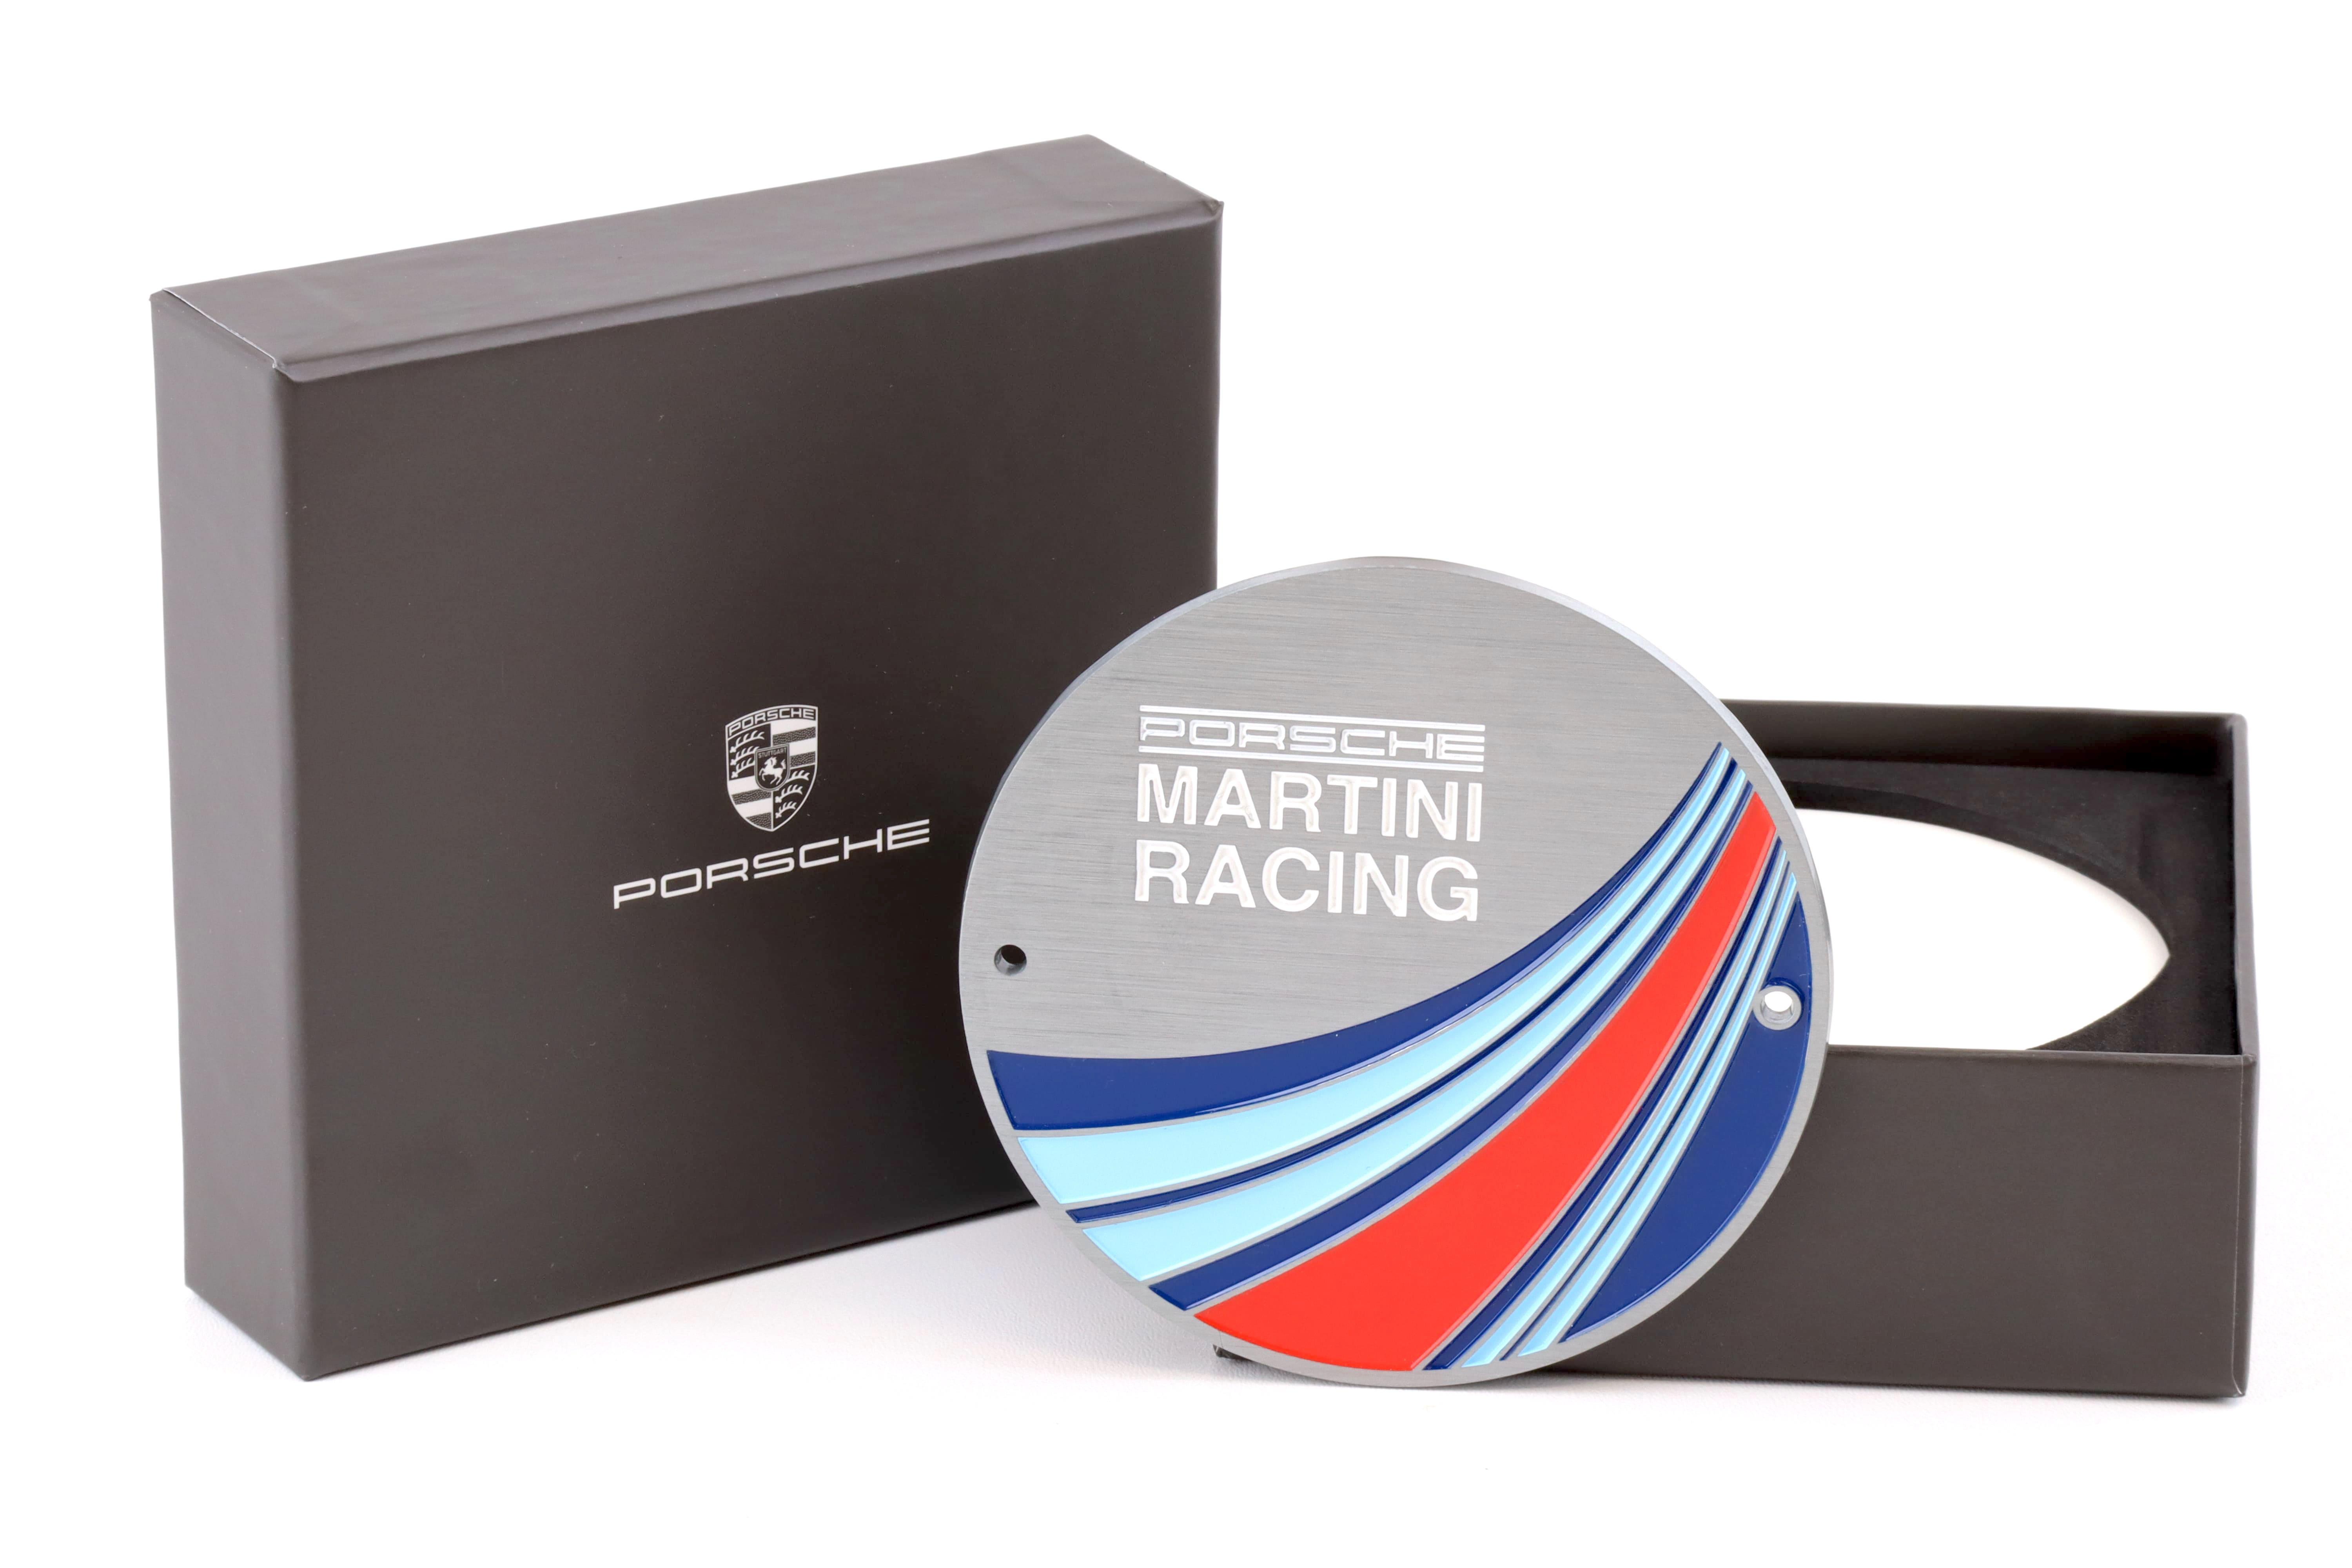 Original Porsche MARTINI RACING Grill Badge Emblem WAP DEALER VERSION